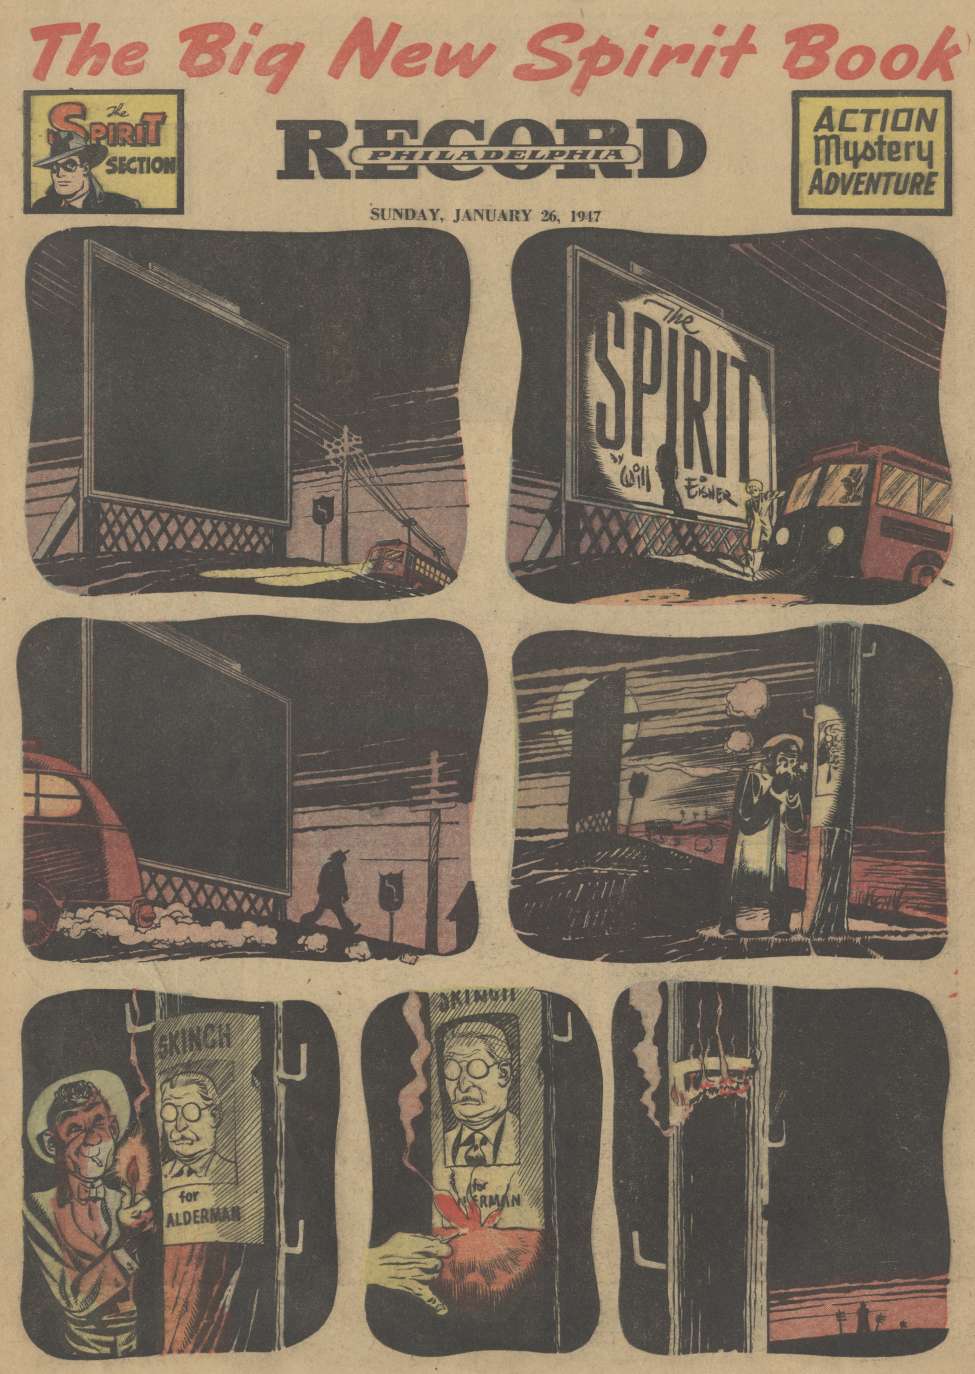 Comic Book Cover For The Spirit (1947-01-26) - Philadelphia Record